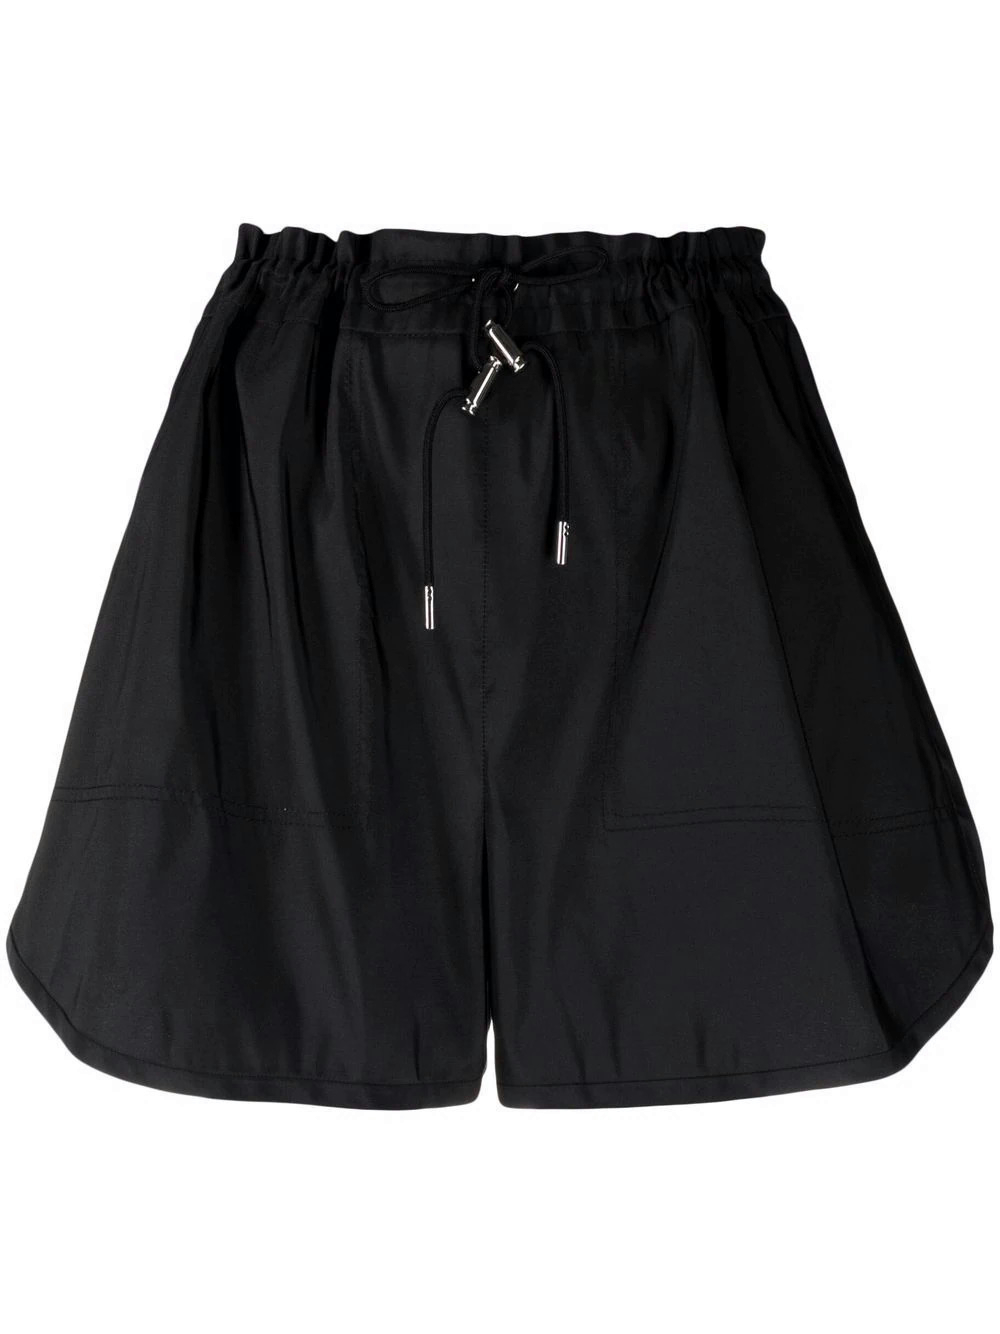 Alexander McQueen - Exploded high-waisted shorts